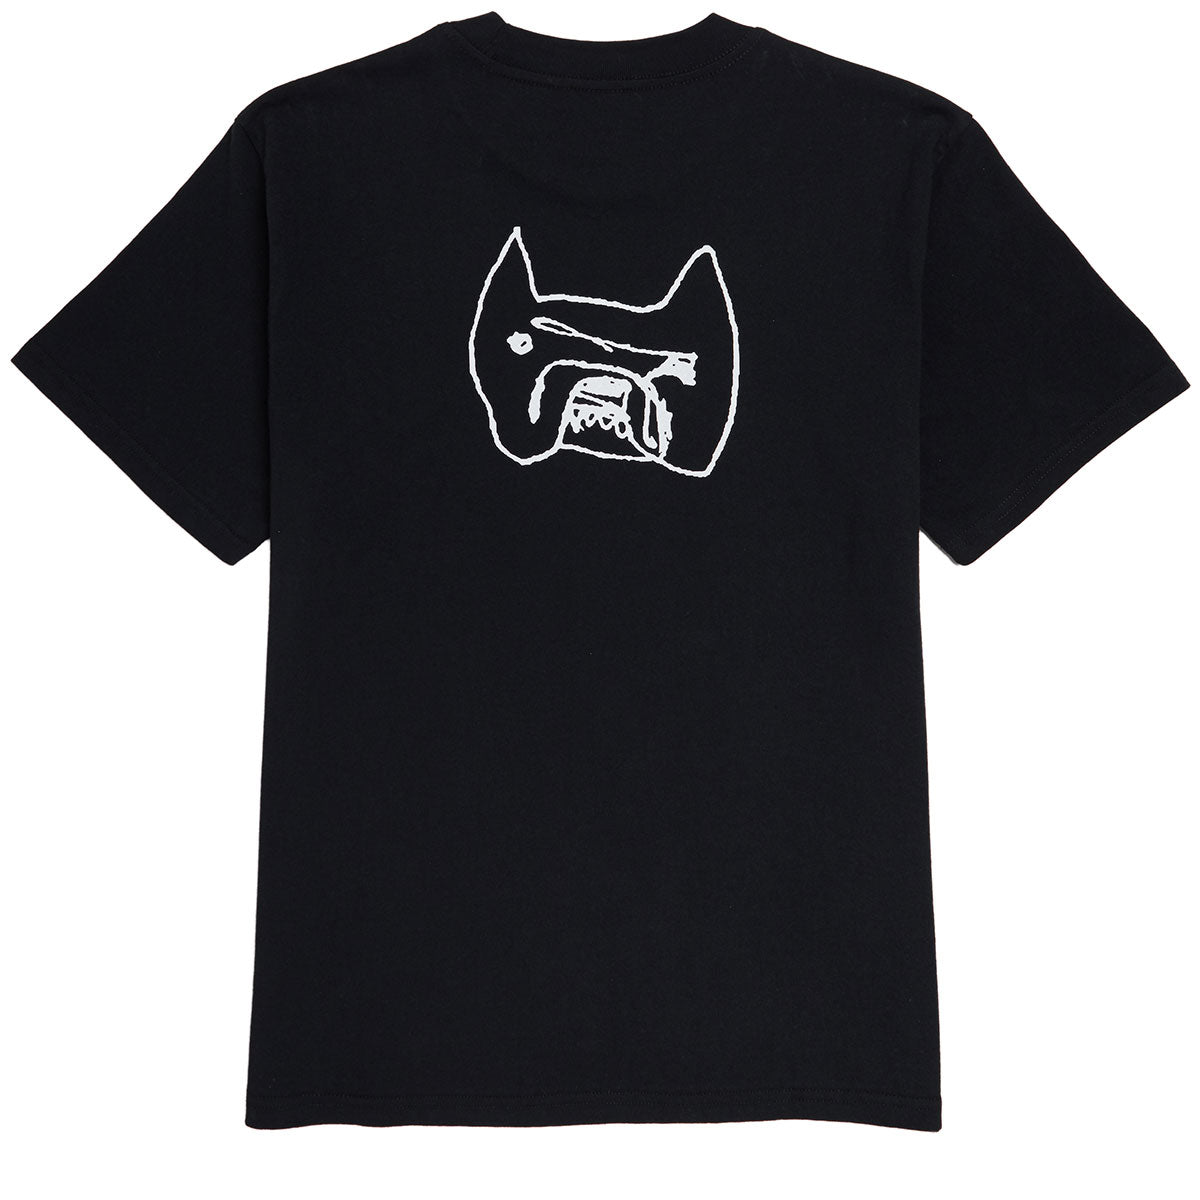 Former Pound T-Shirt - Black image 1